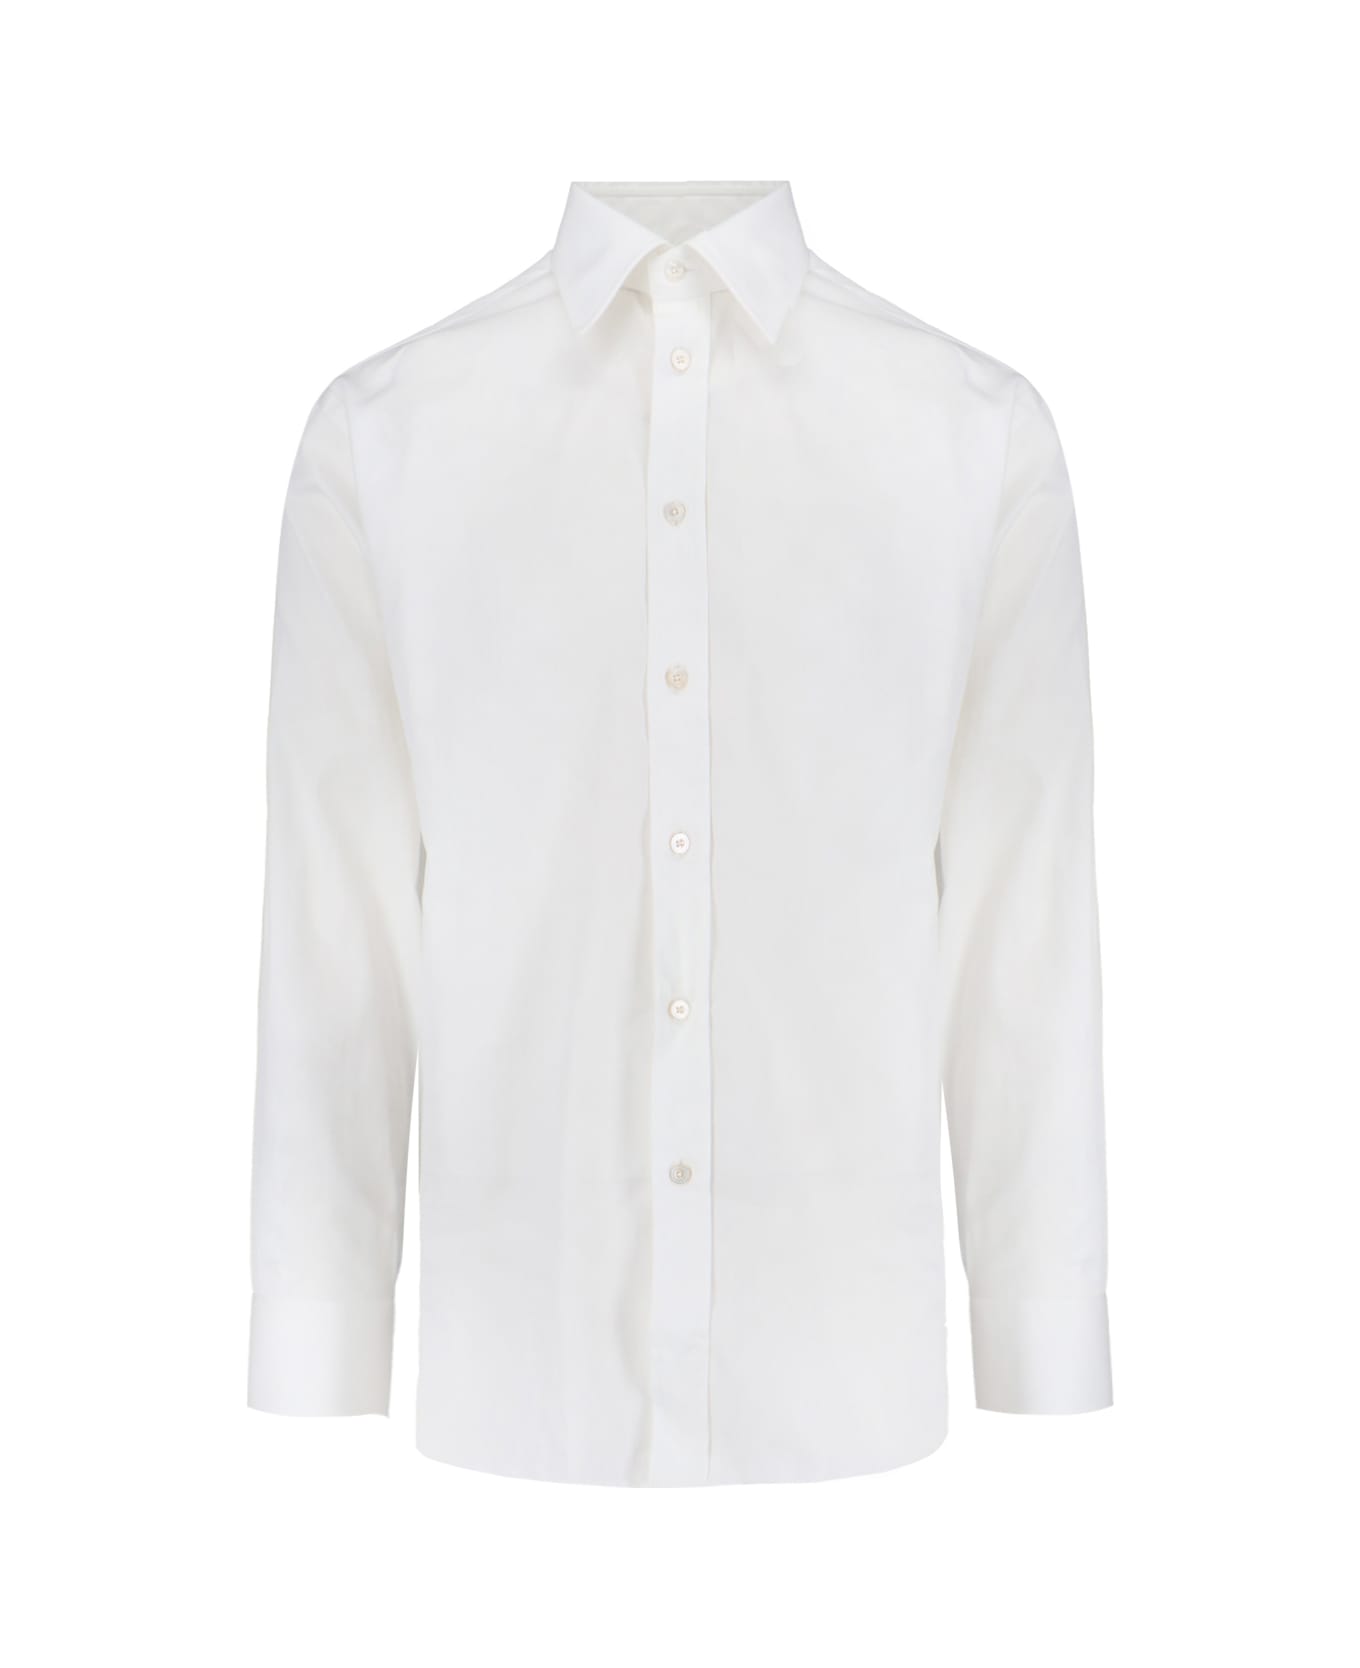 Tom Ford Classic Shirt - White